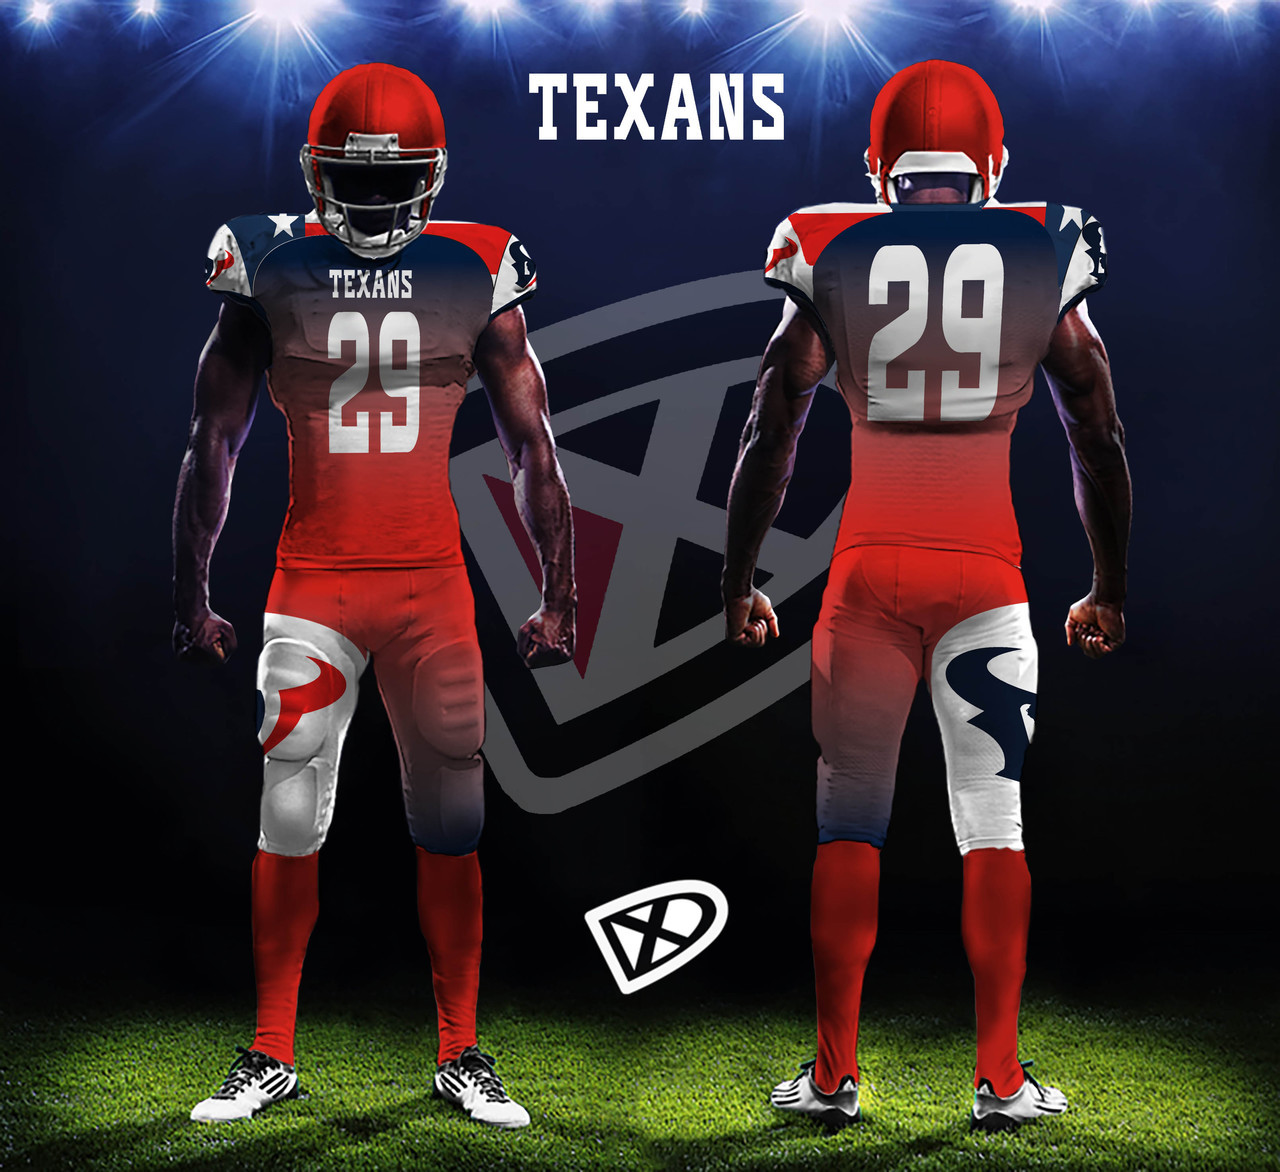 2020 Season Tigers Sublimation American football Uniform, IQ Team Uniform  Manufacturing